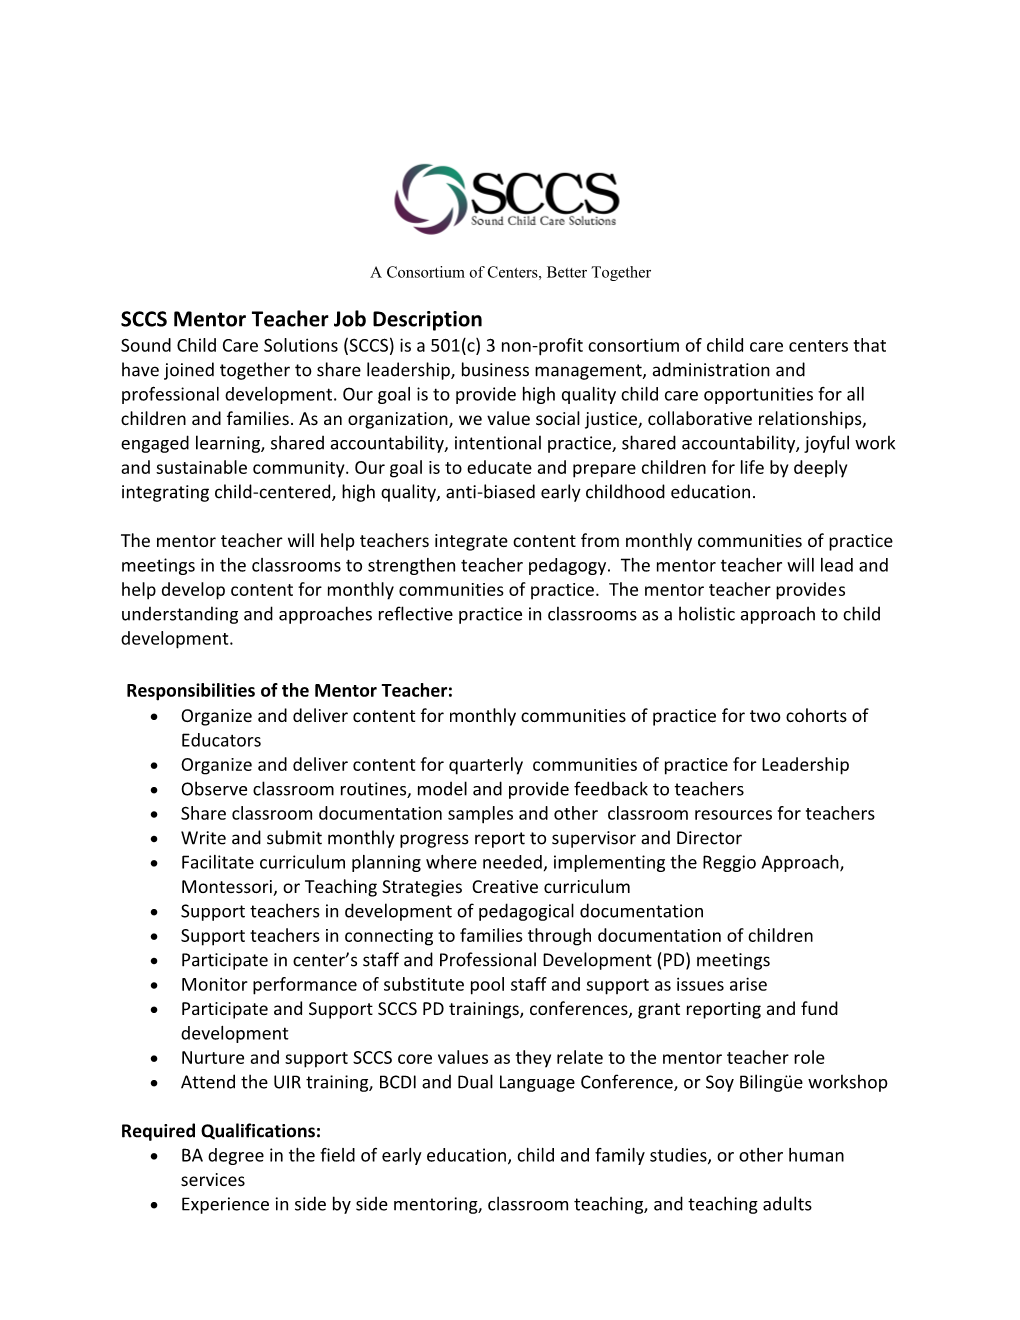 SCCS Mentor Teacher Job Description